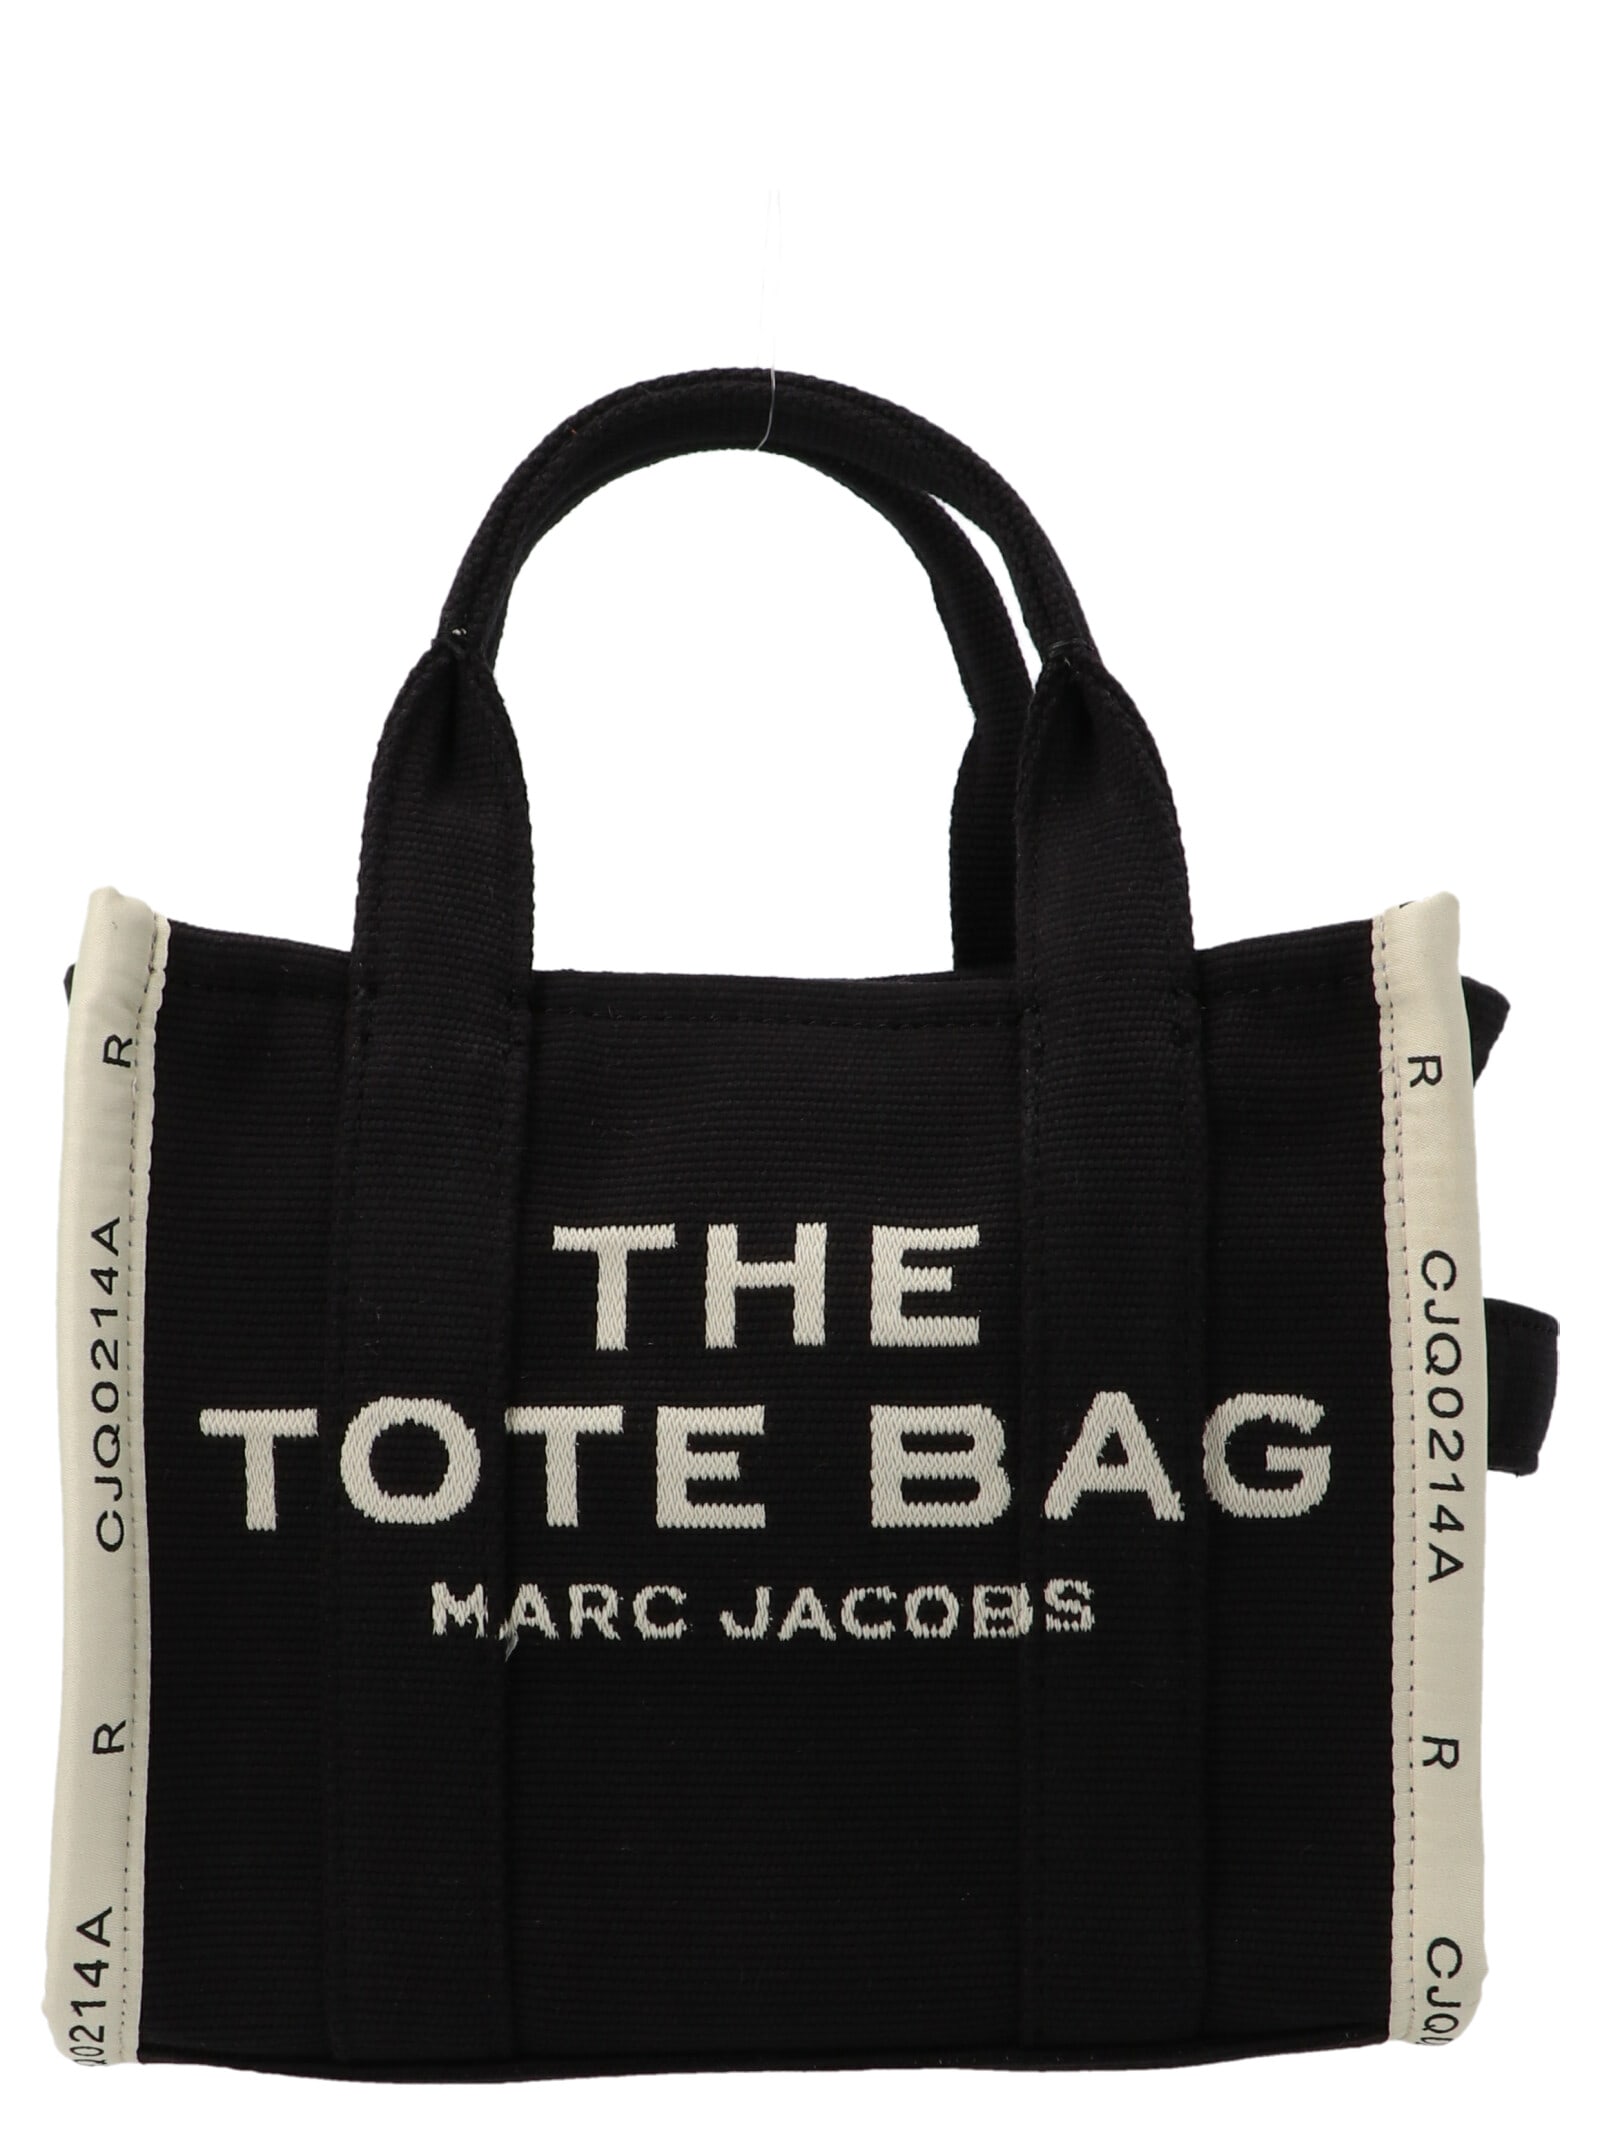 Marc Jacobs traveler Tote Mini Shopping Bag